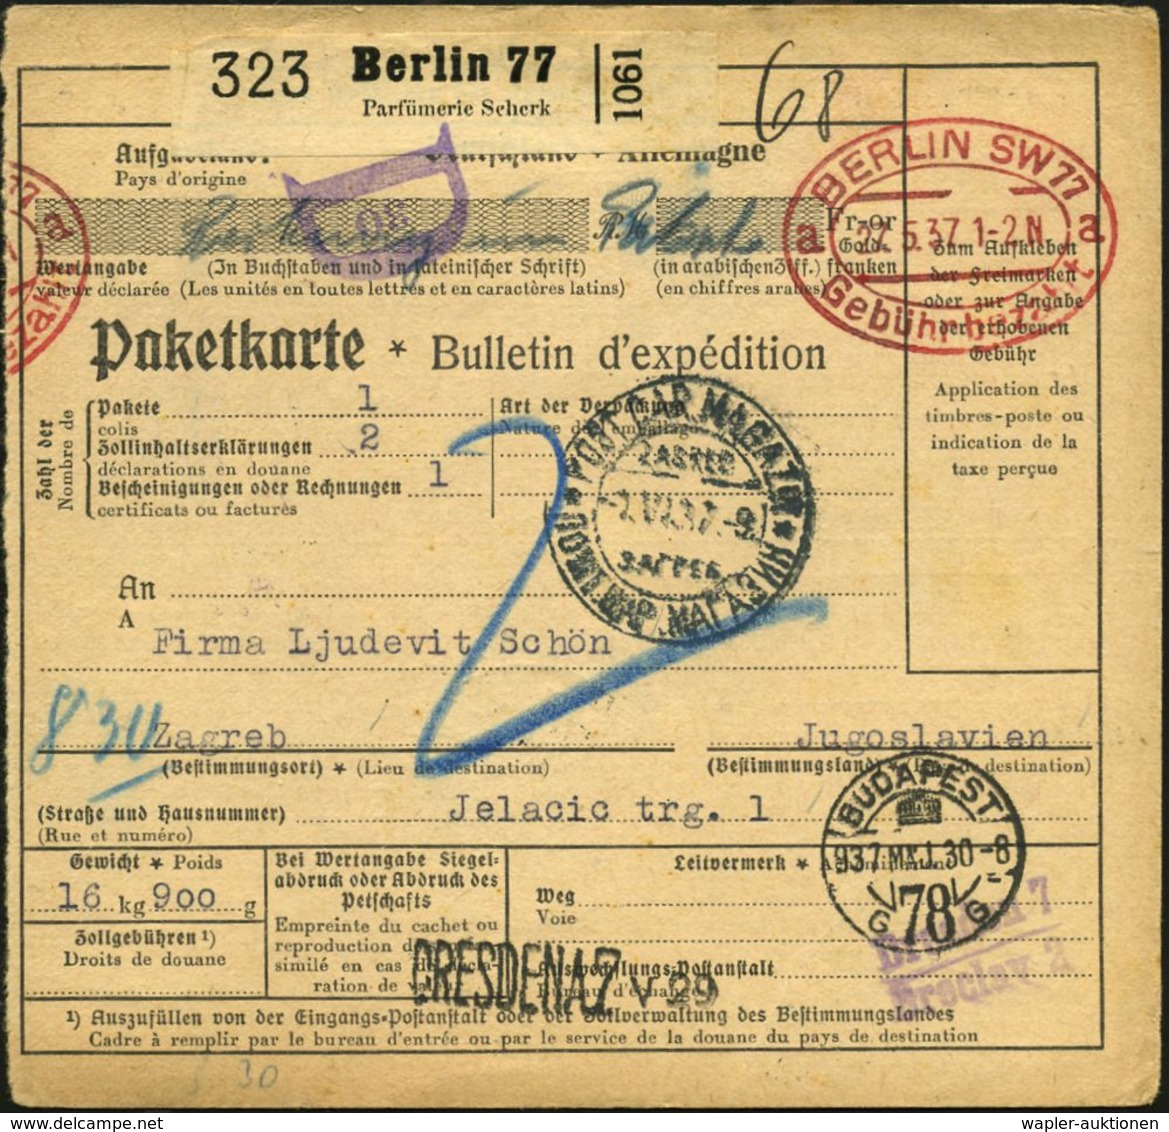 KOSMETIK / PARFÜM : Berlin 77/ Parfümerie Scherk 1937 (27.5.) Selbstbucher-Paketzettel + Ovaler PFS: BERLIN SW77/a A/Geb - Pharmazie